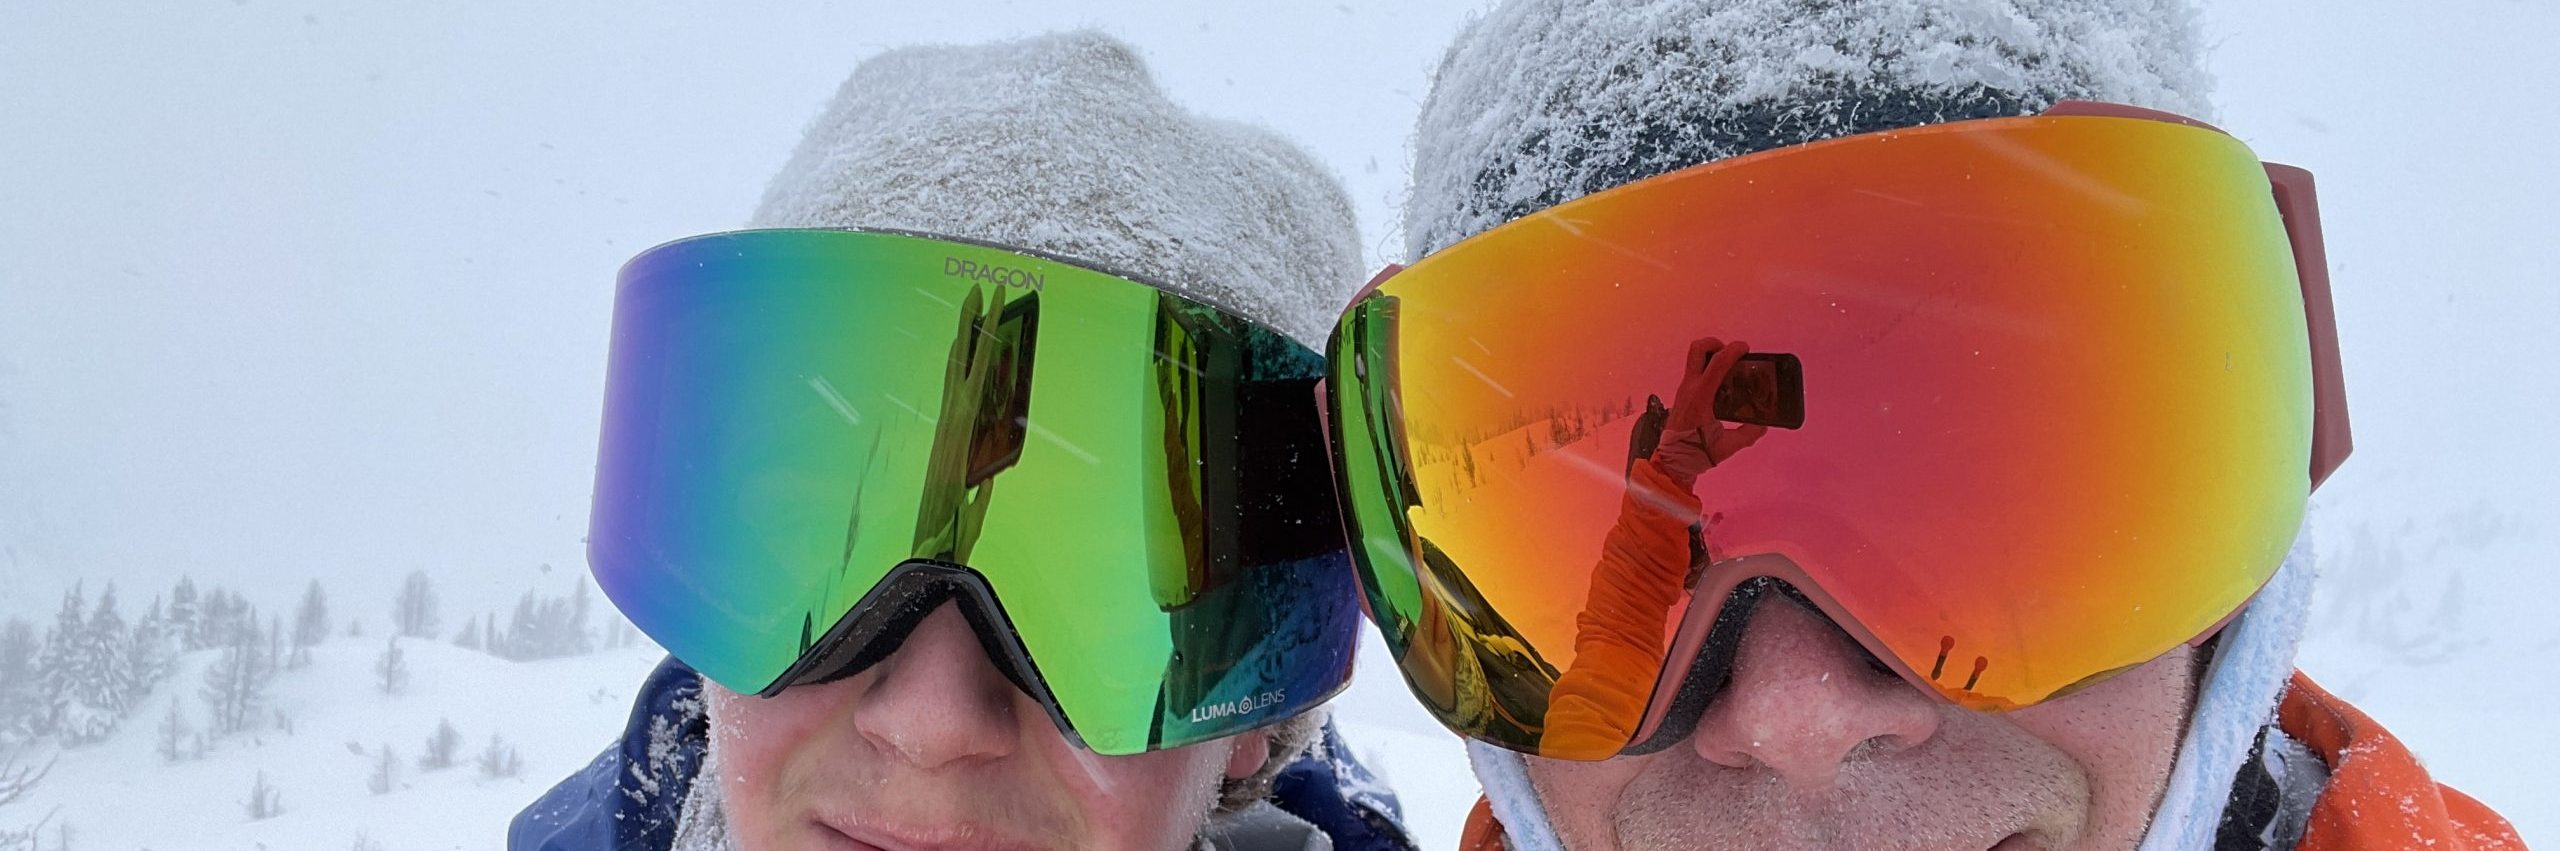 gek Lot Verenigen Ski Goggles